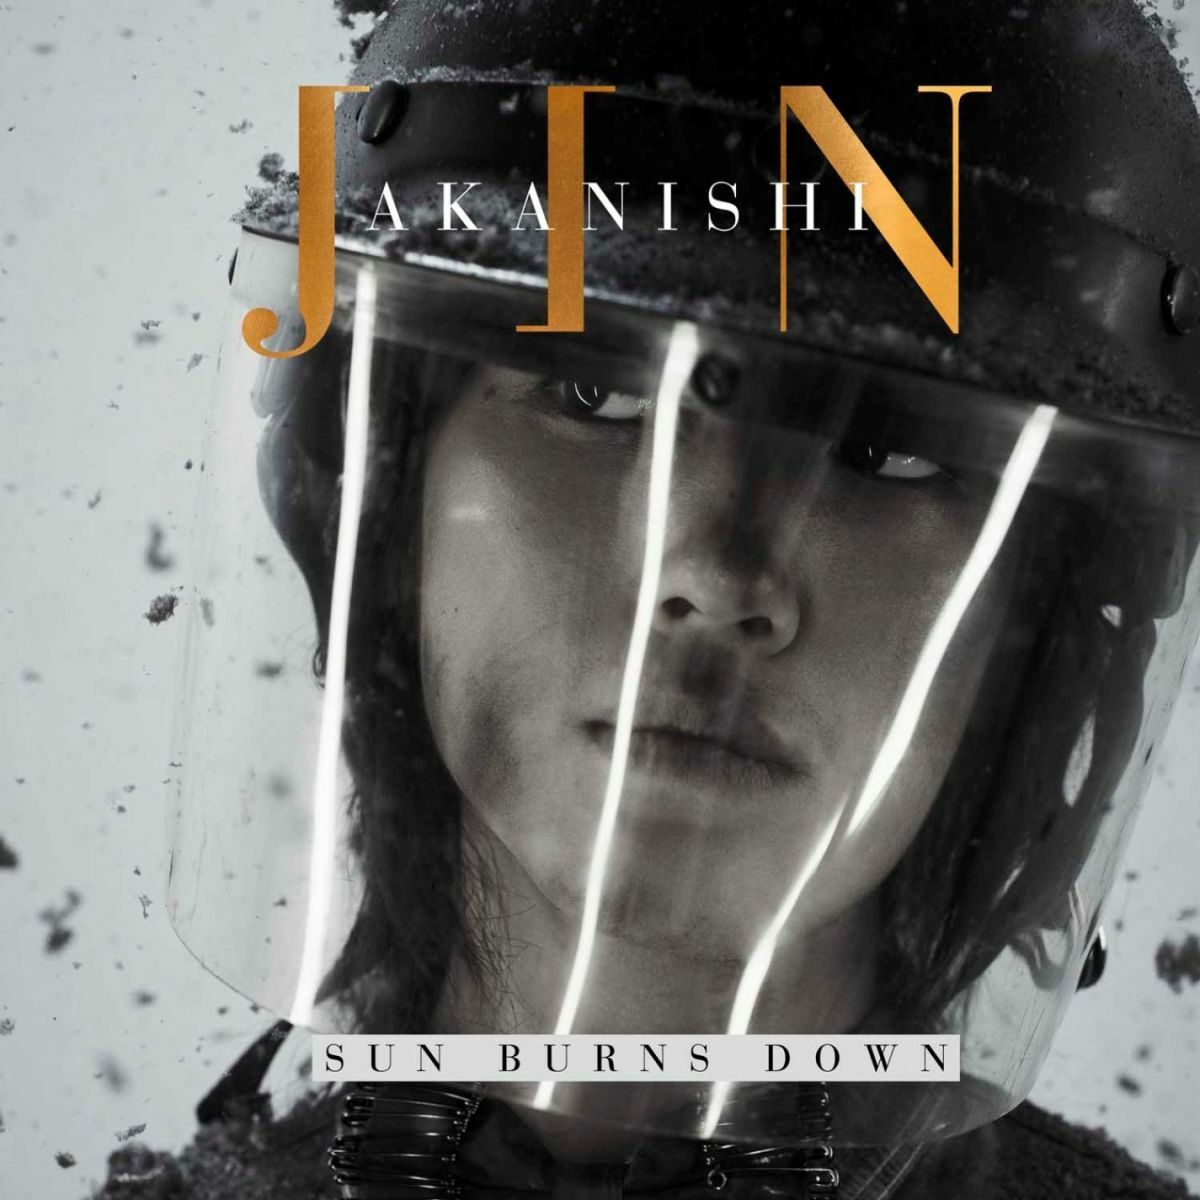 Jin Akanishi: albums, songs, playlists | Listen on Deezer